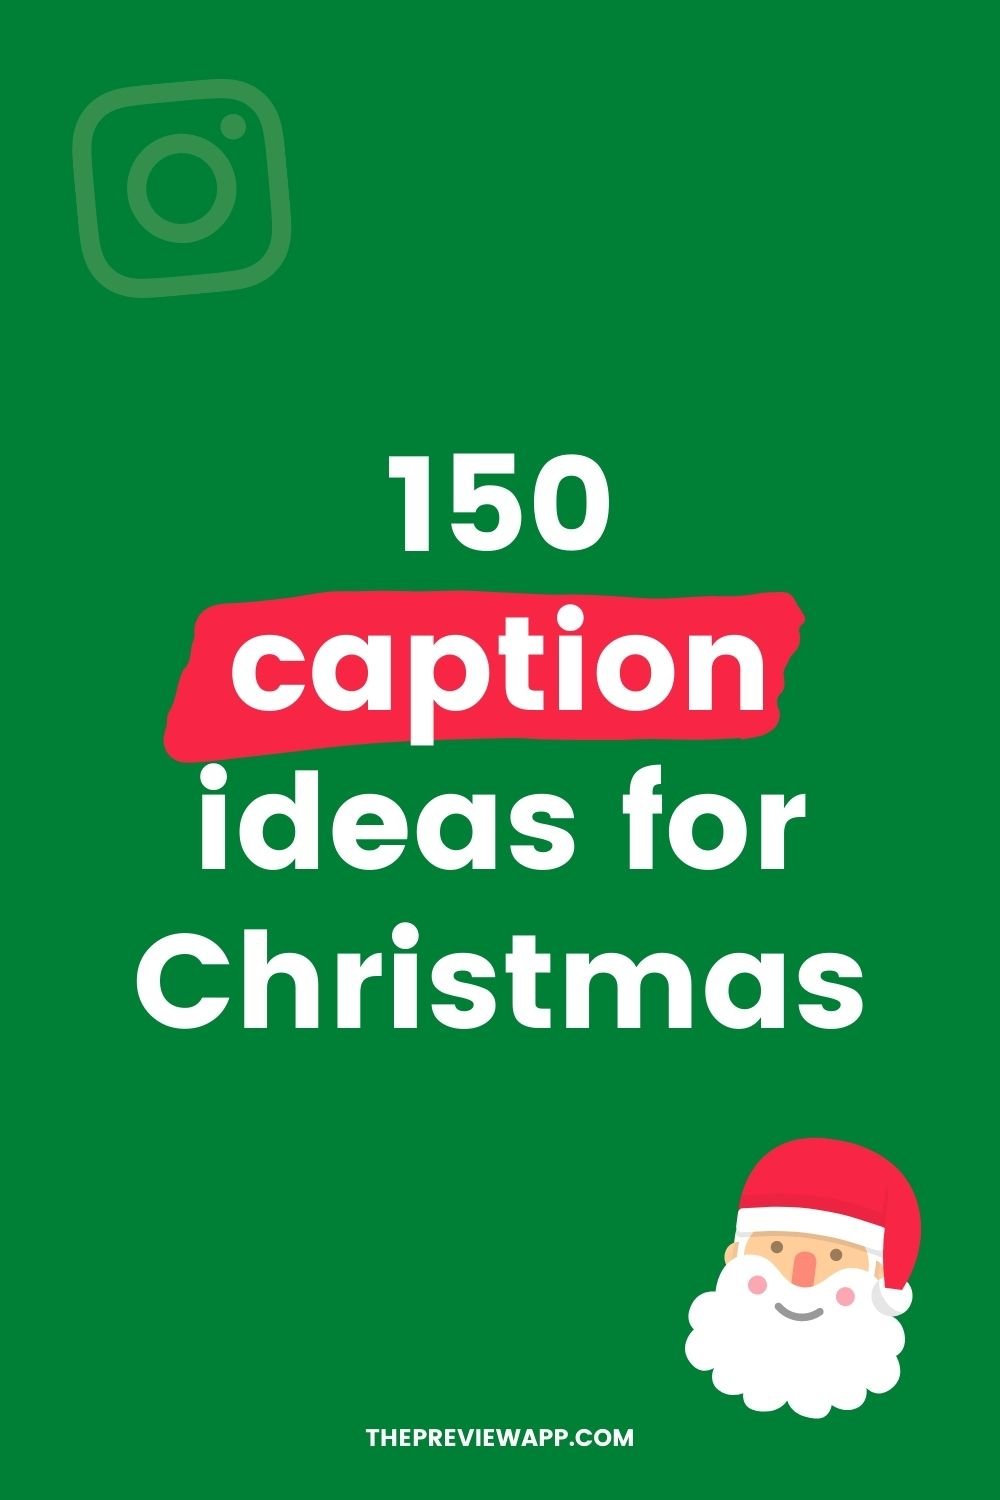 Christmas captions for Instagram